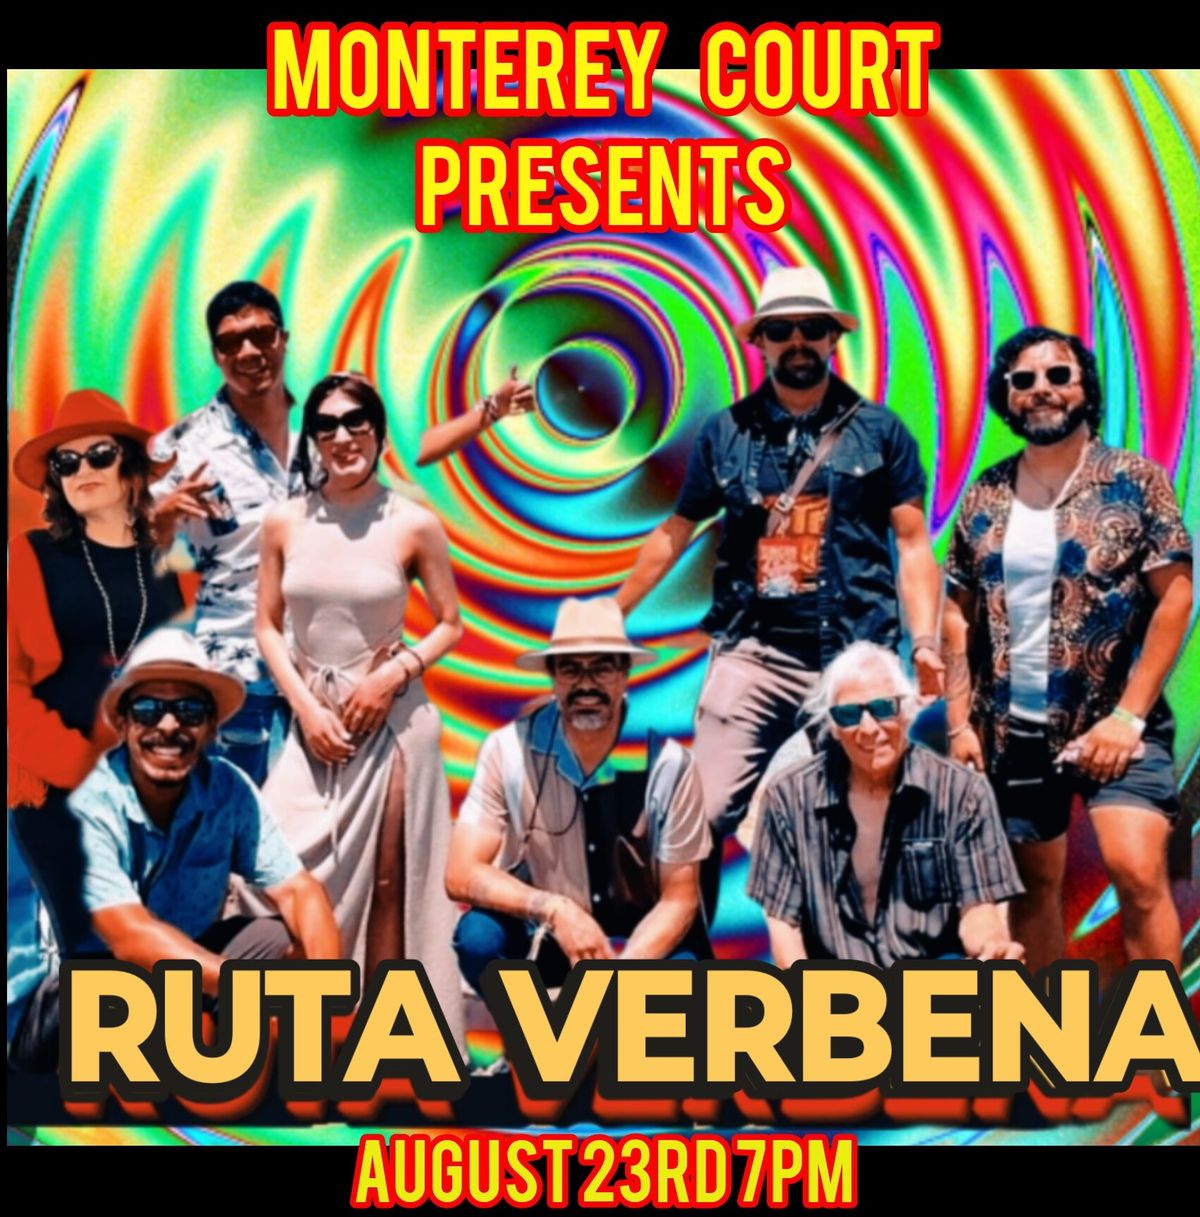 RUTA VERBENA LIVE AT MONTEREY COURT